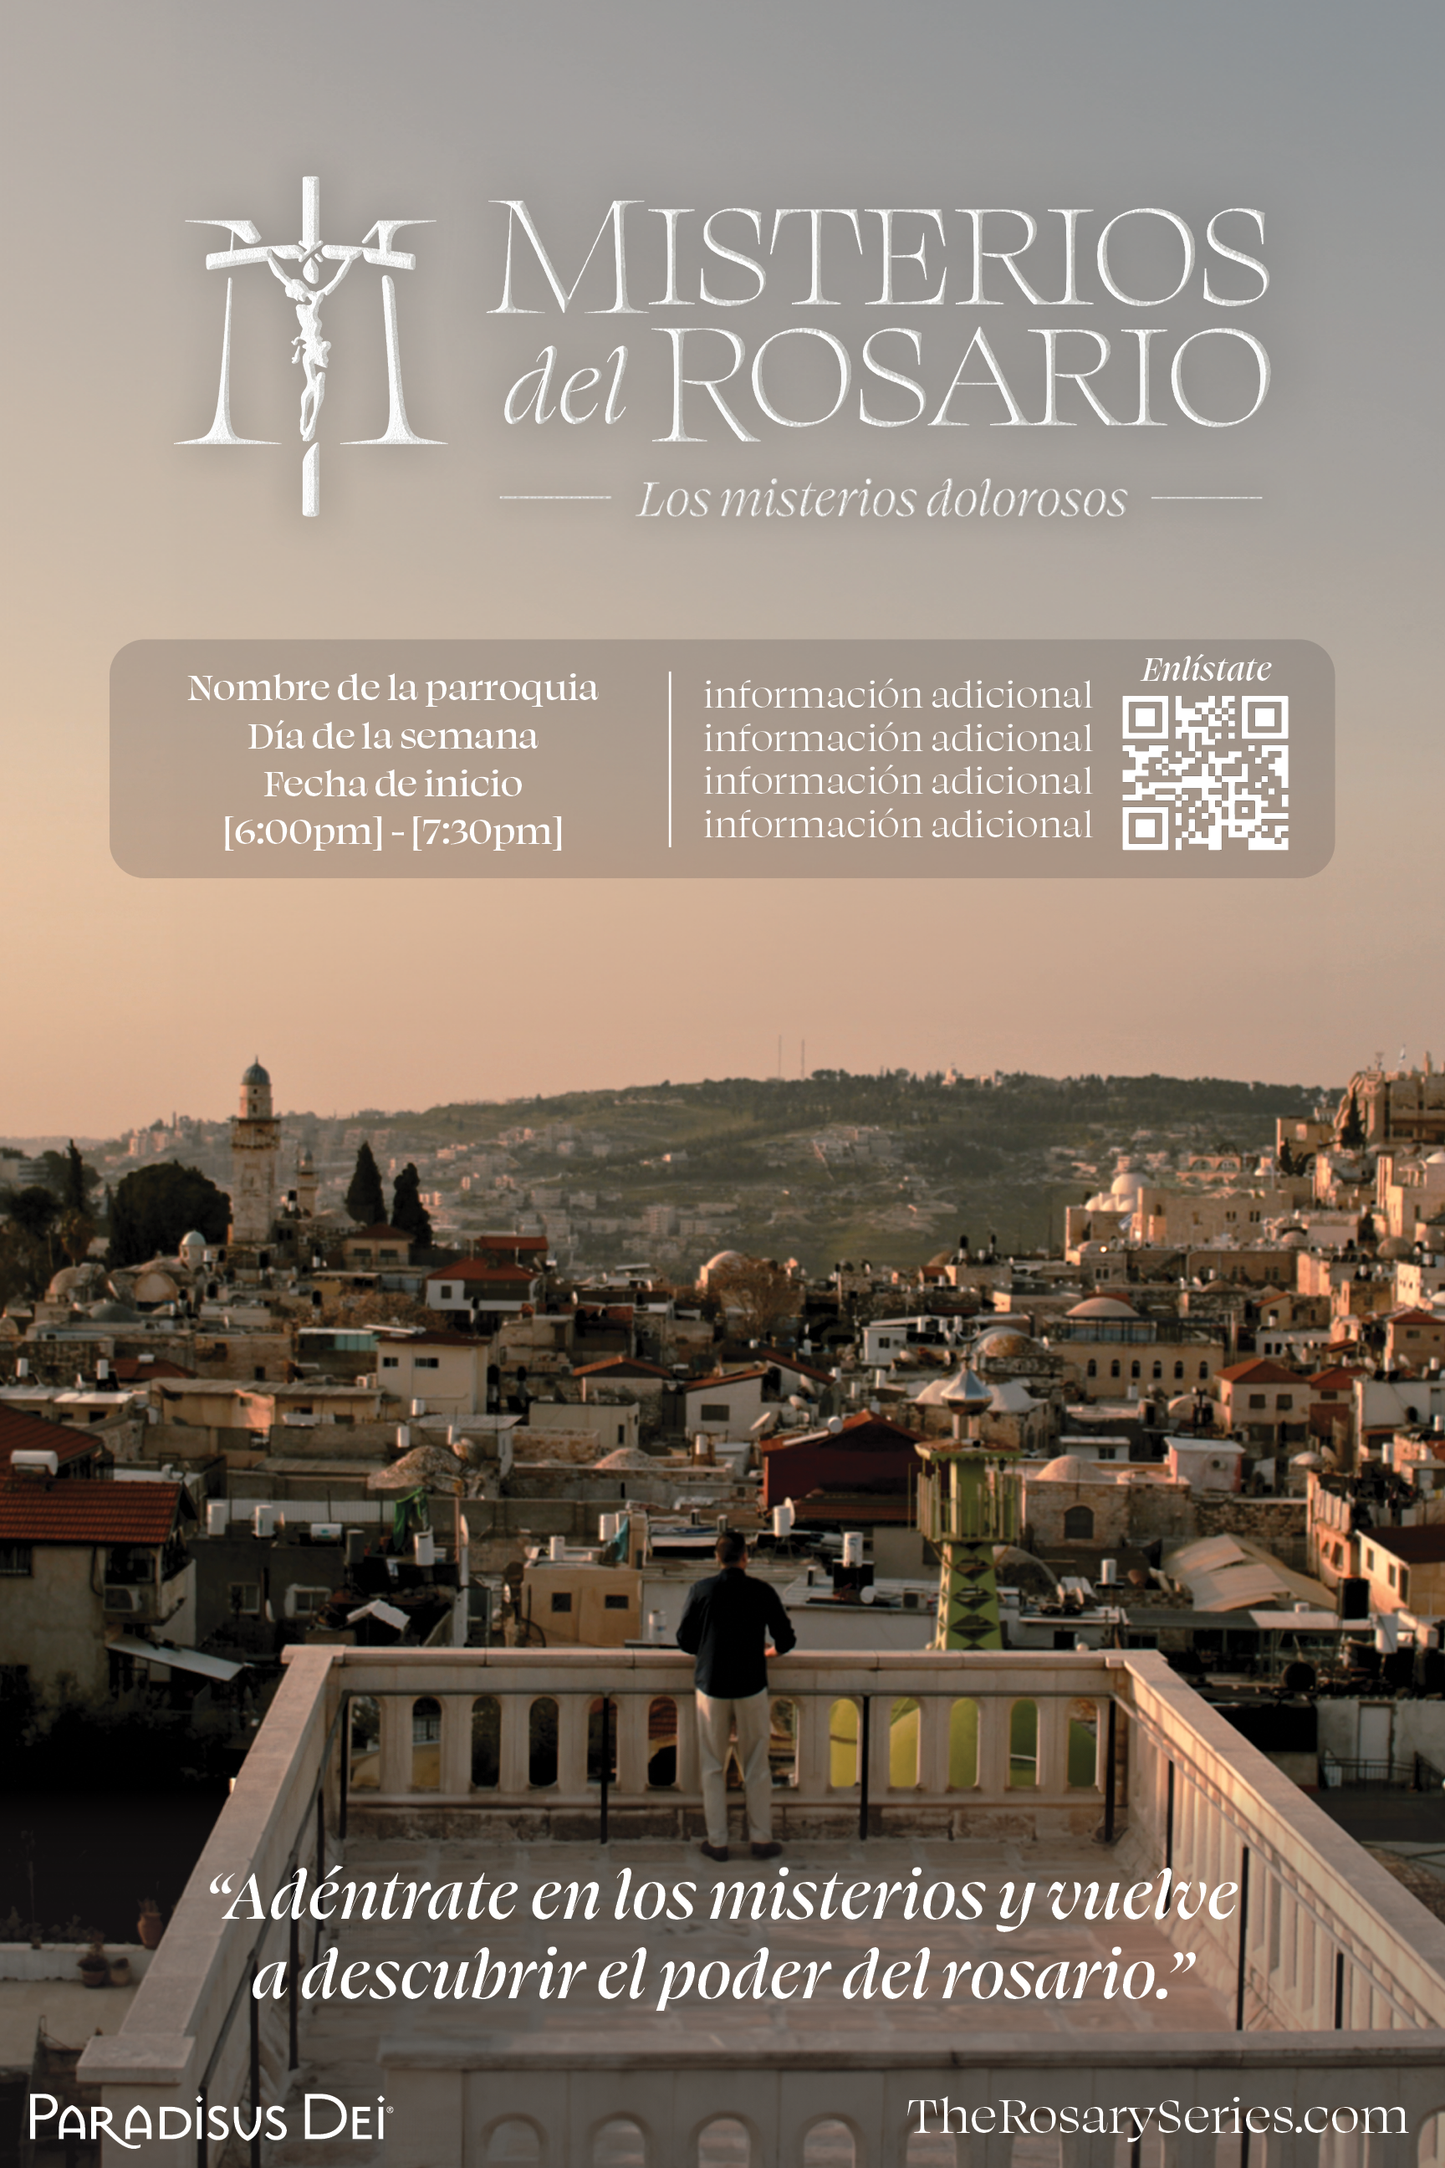 Misterios del Rosario: Dolorosos - Posters - 24 x 36 (Set of 2)